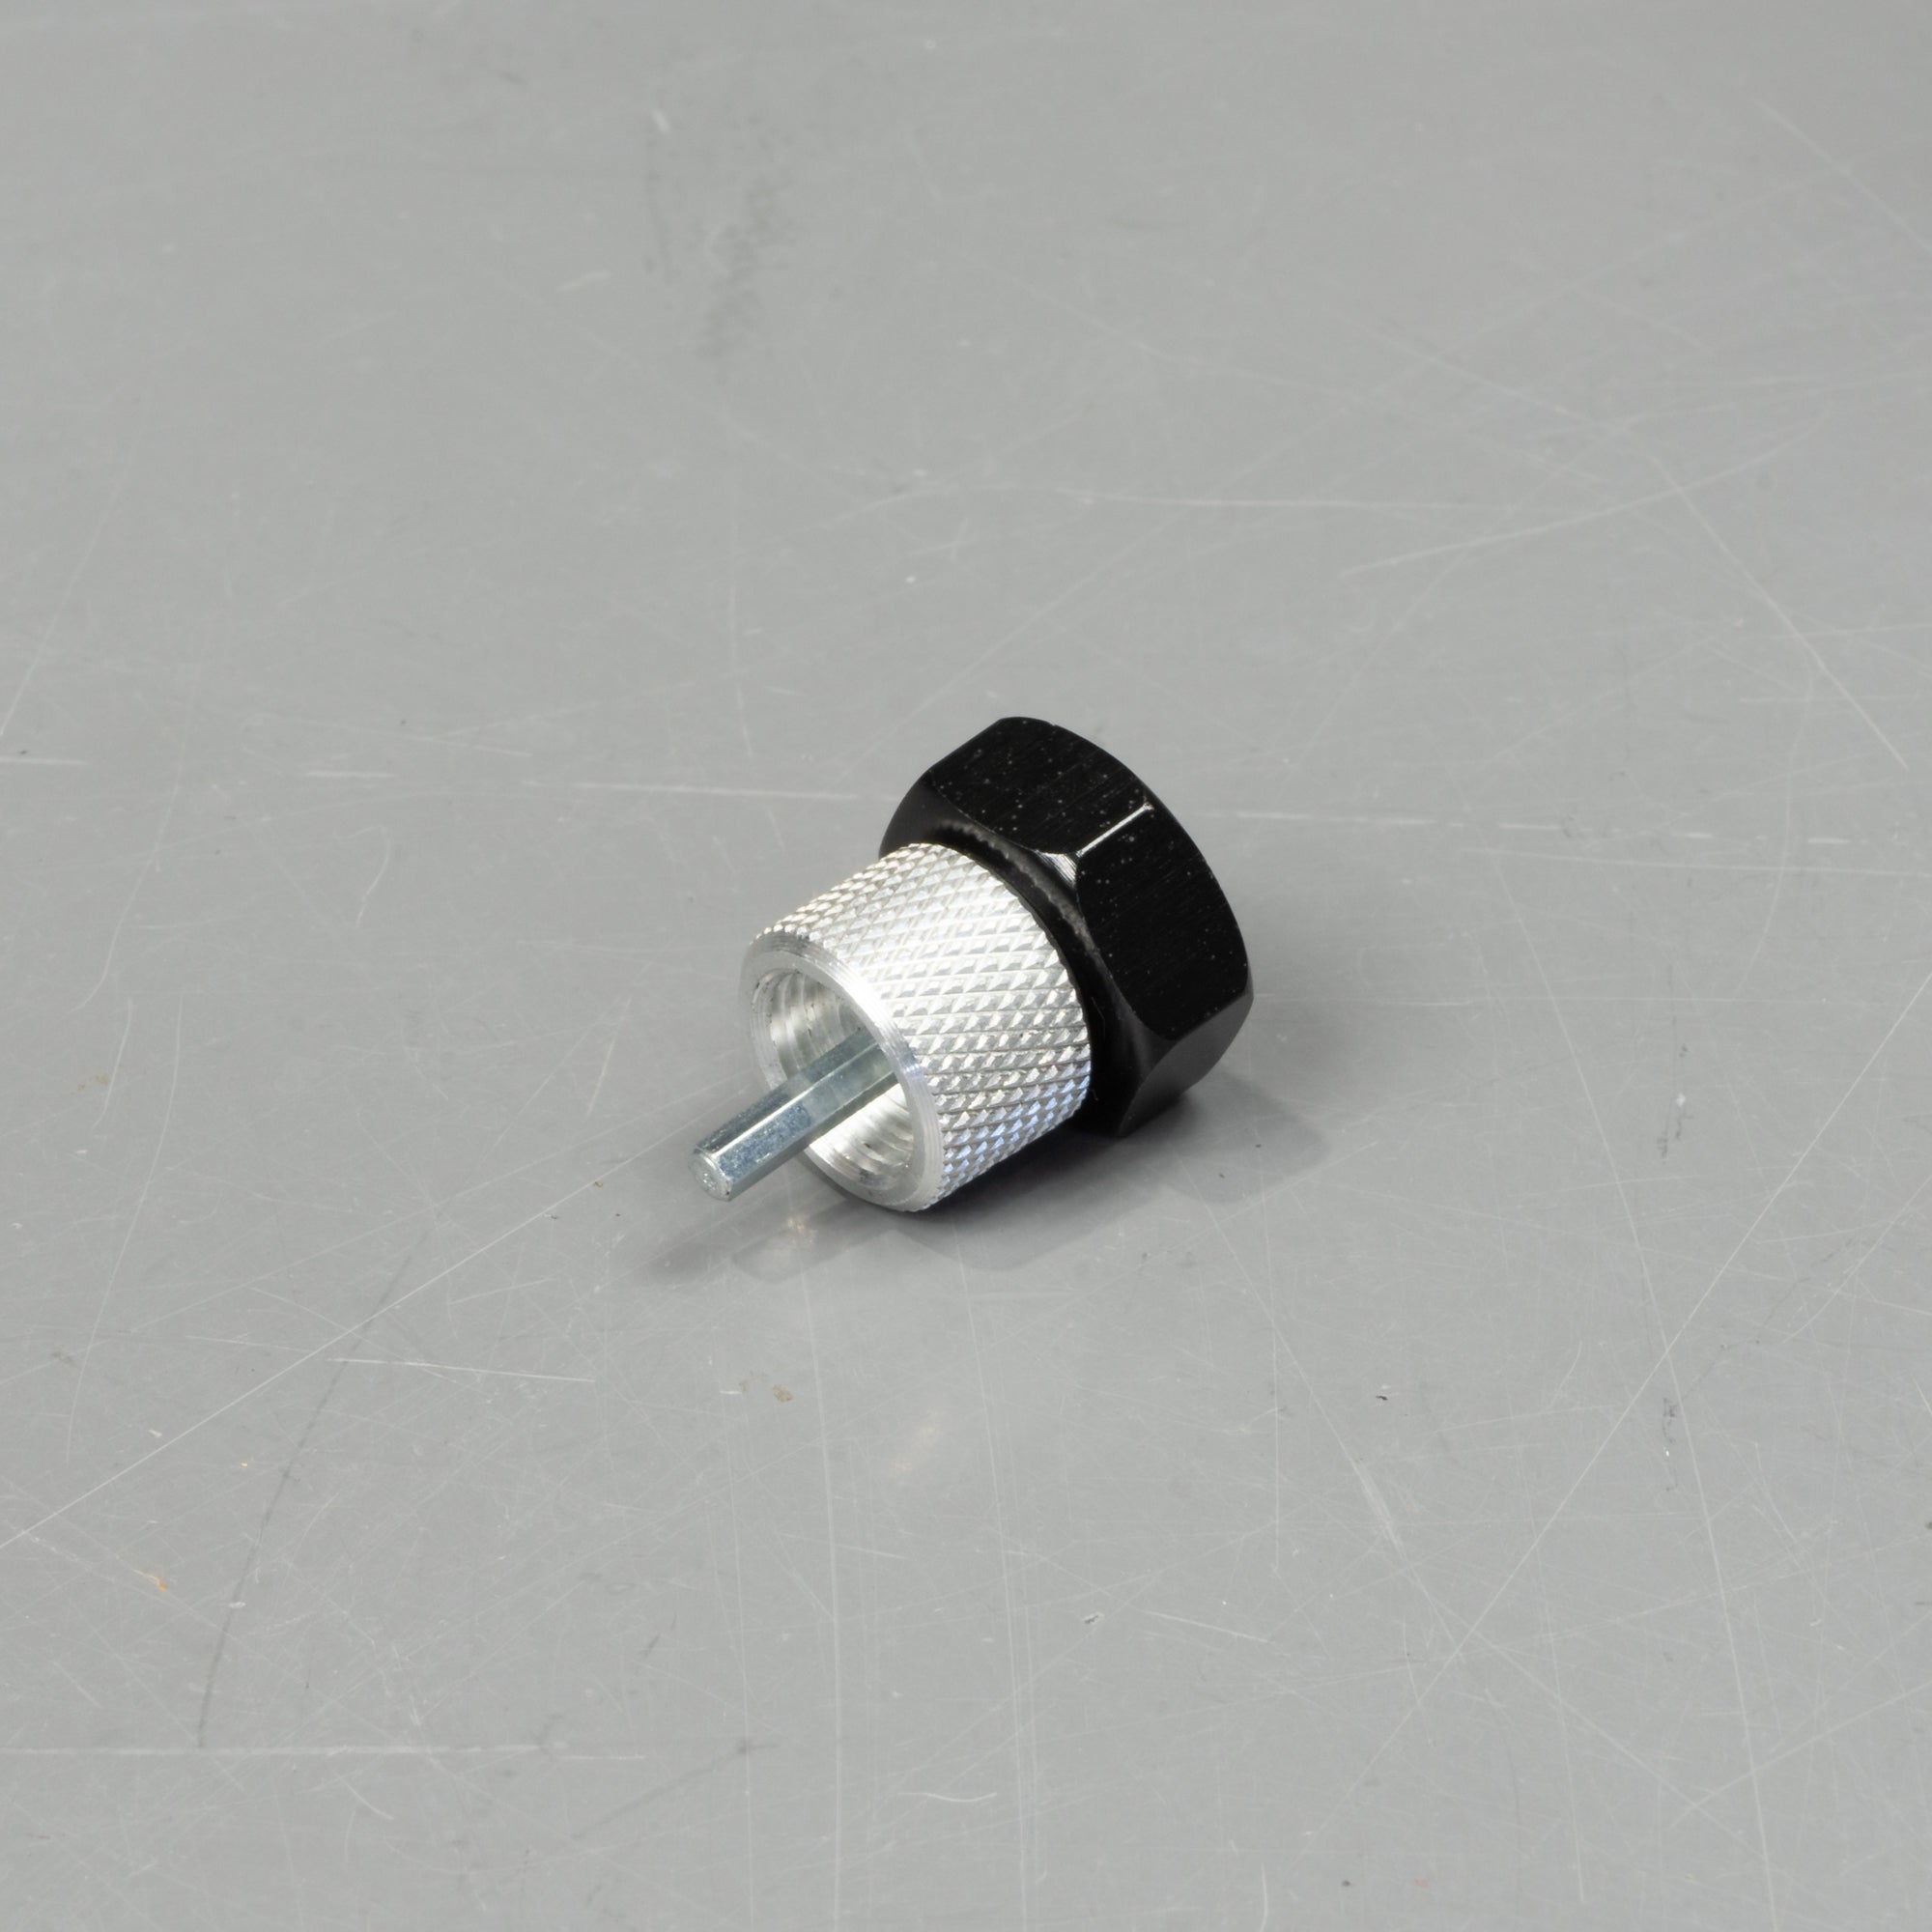 Bspoke Suspension Replacement Damper Adjustment Adapter - 12mm